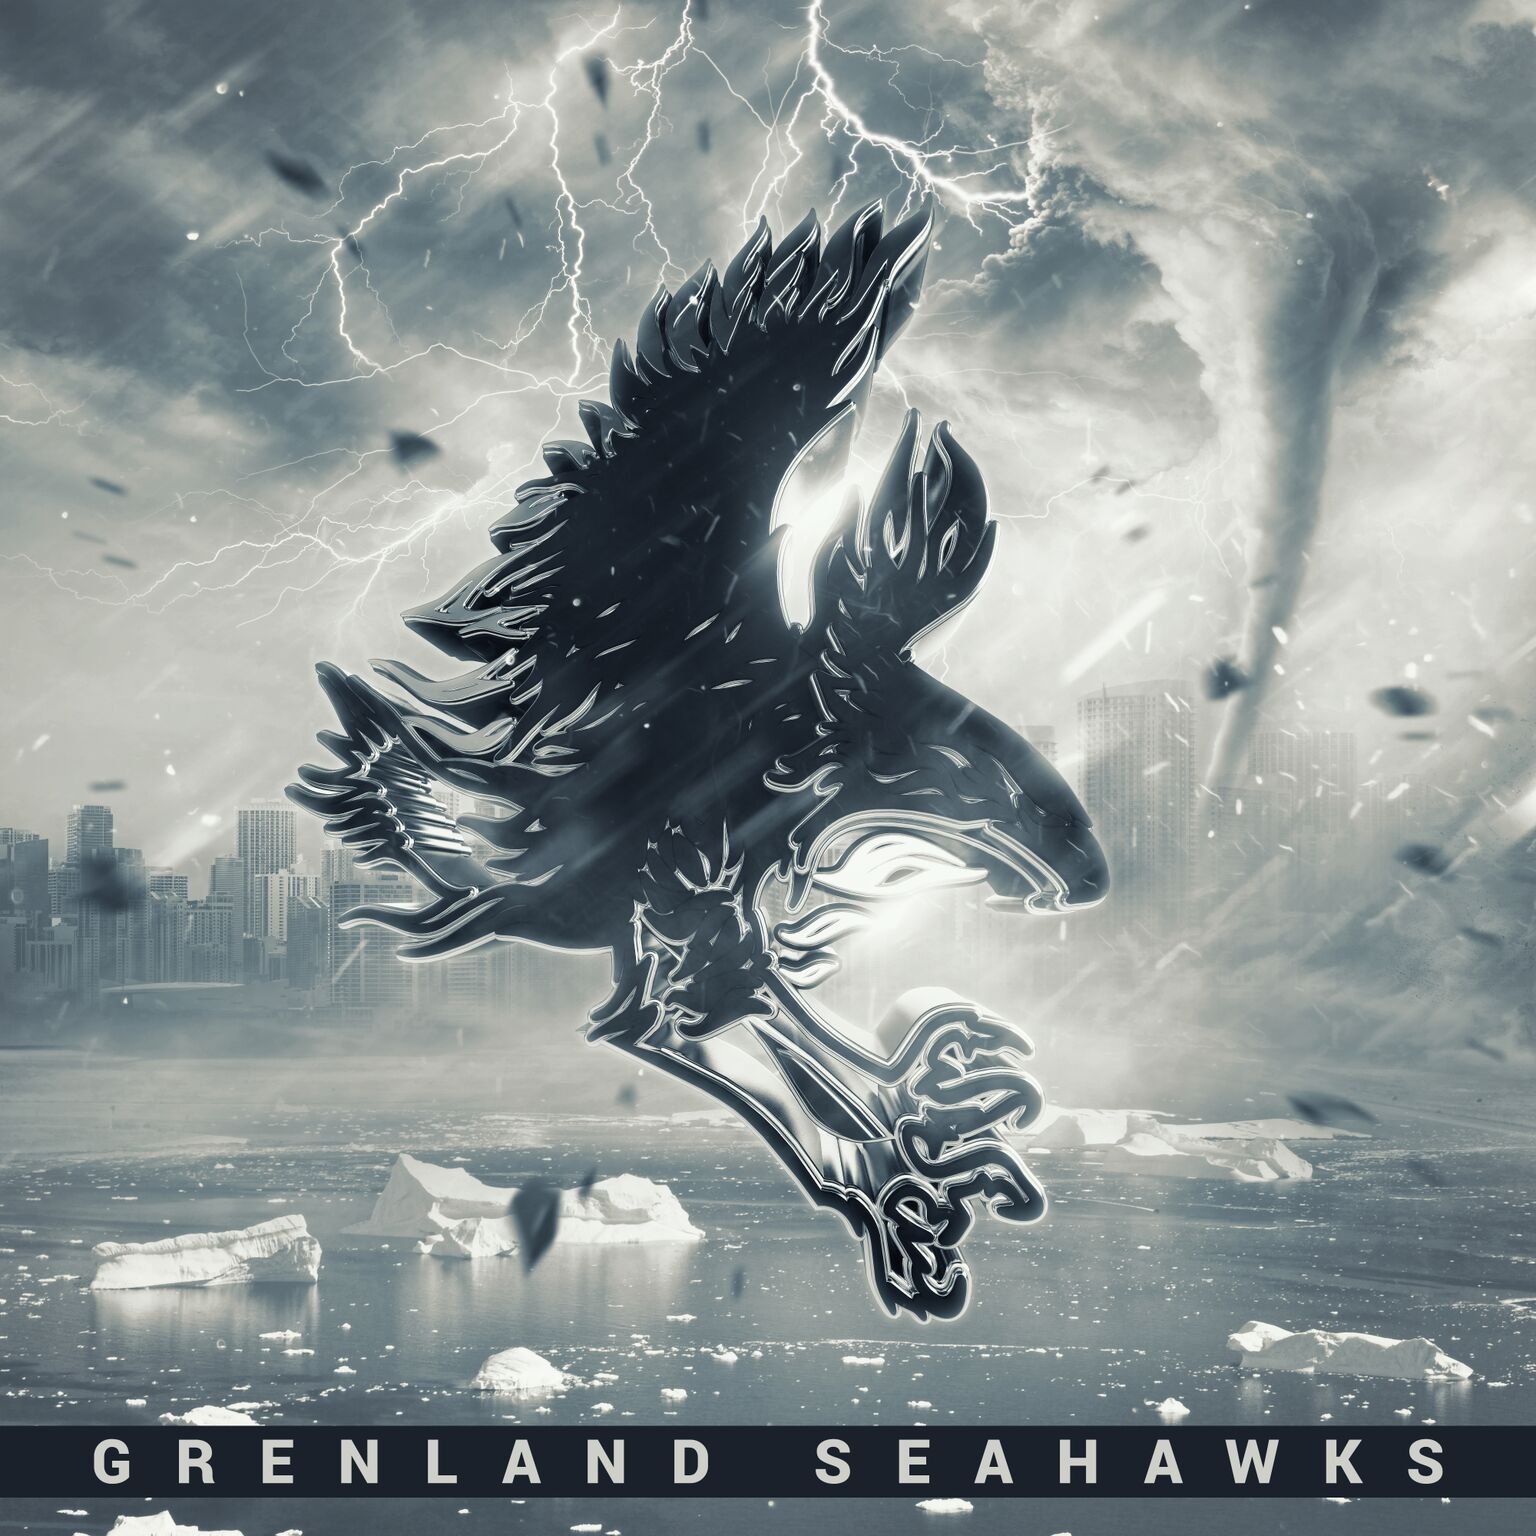 Grenland Seahawks